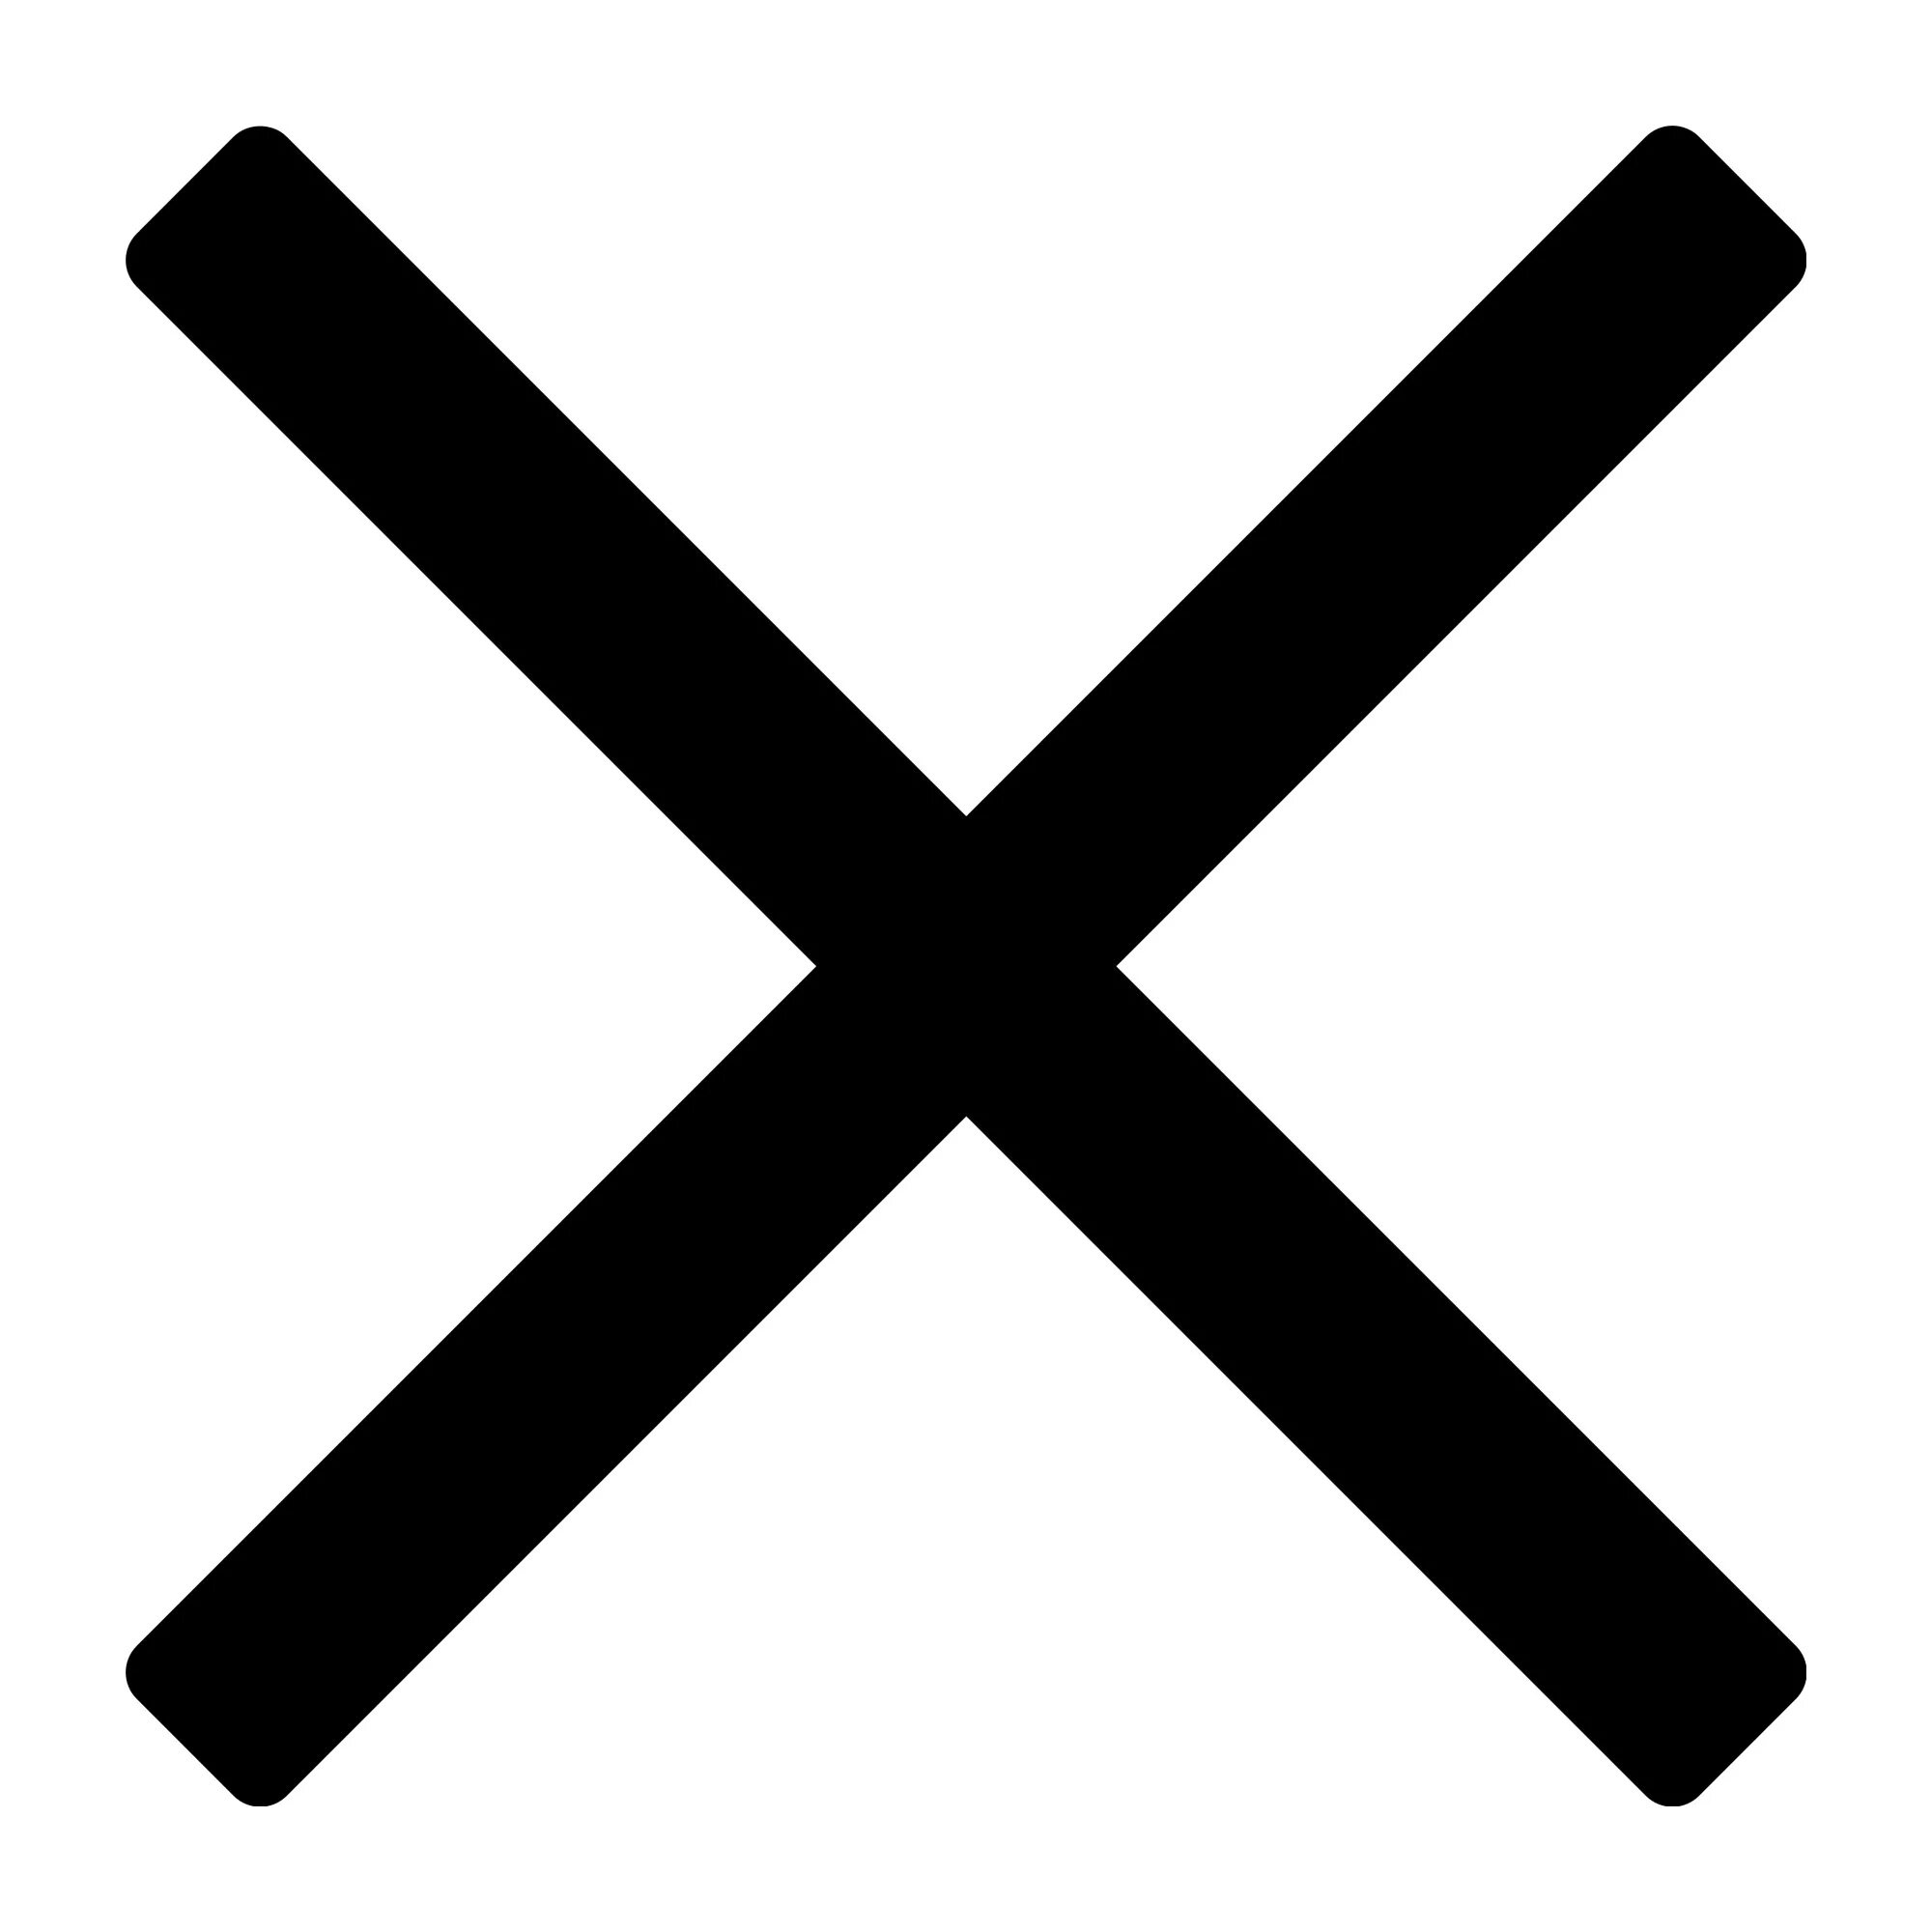 Image x icon. Крестик закрытия окна. Черный крестик. Крестик символ. Знак умножения крестик.